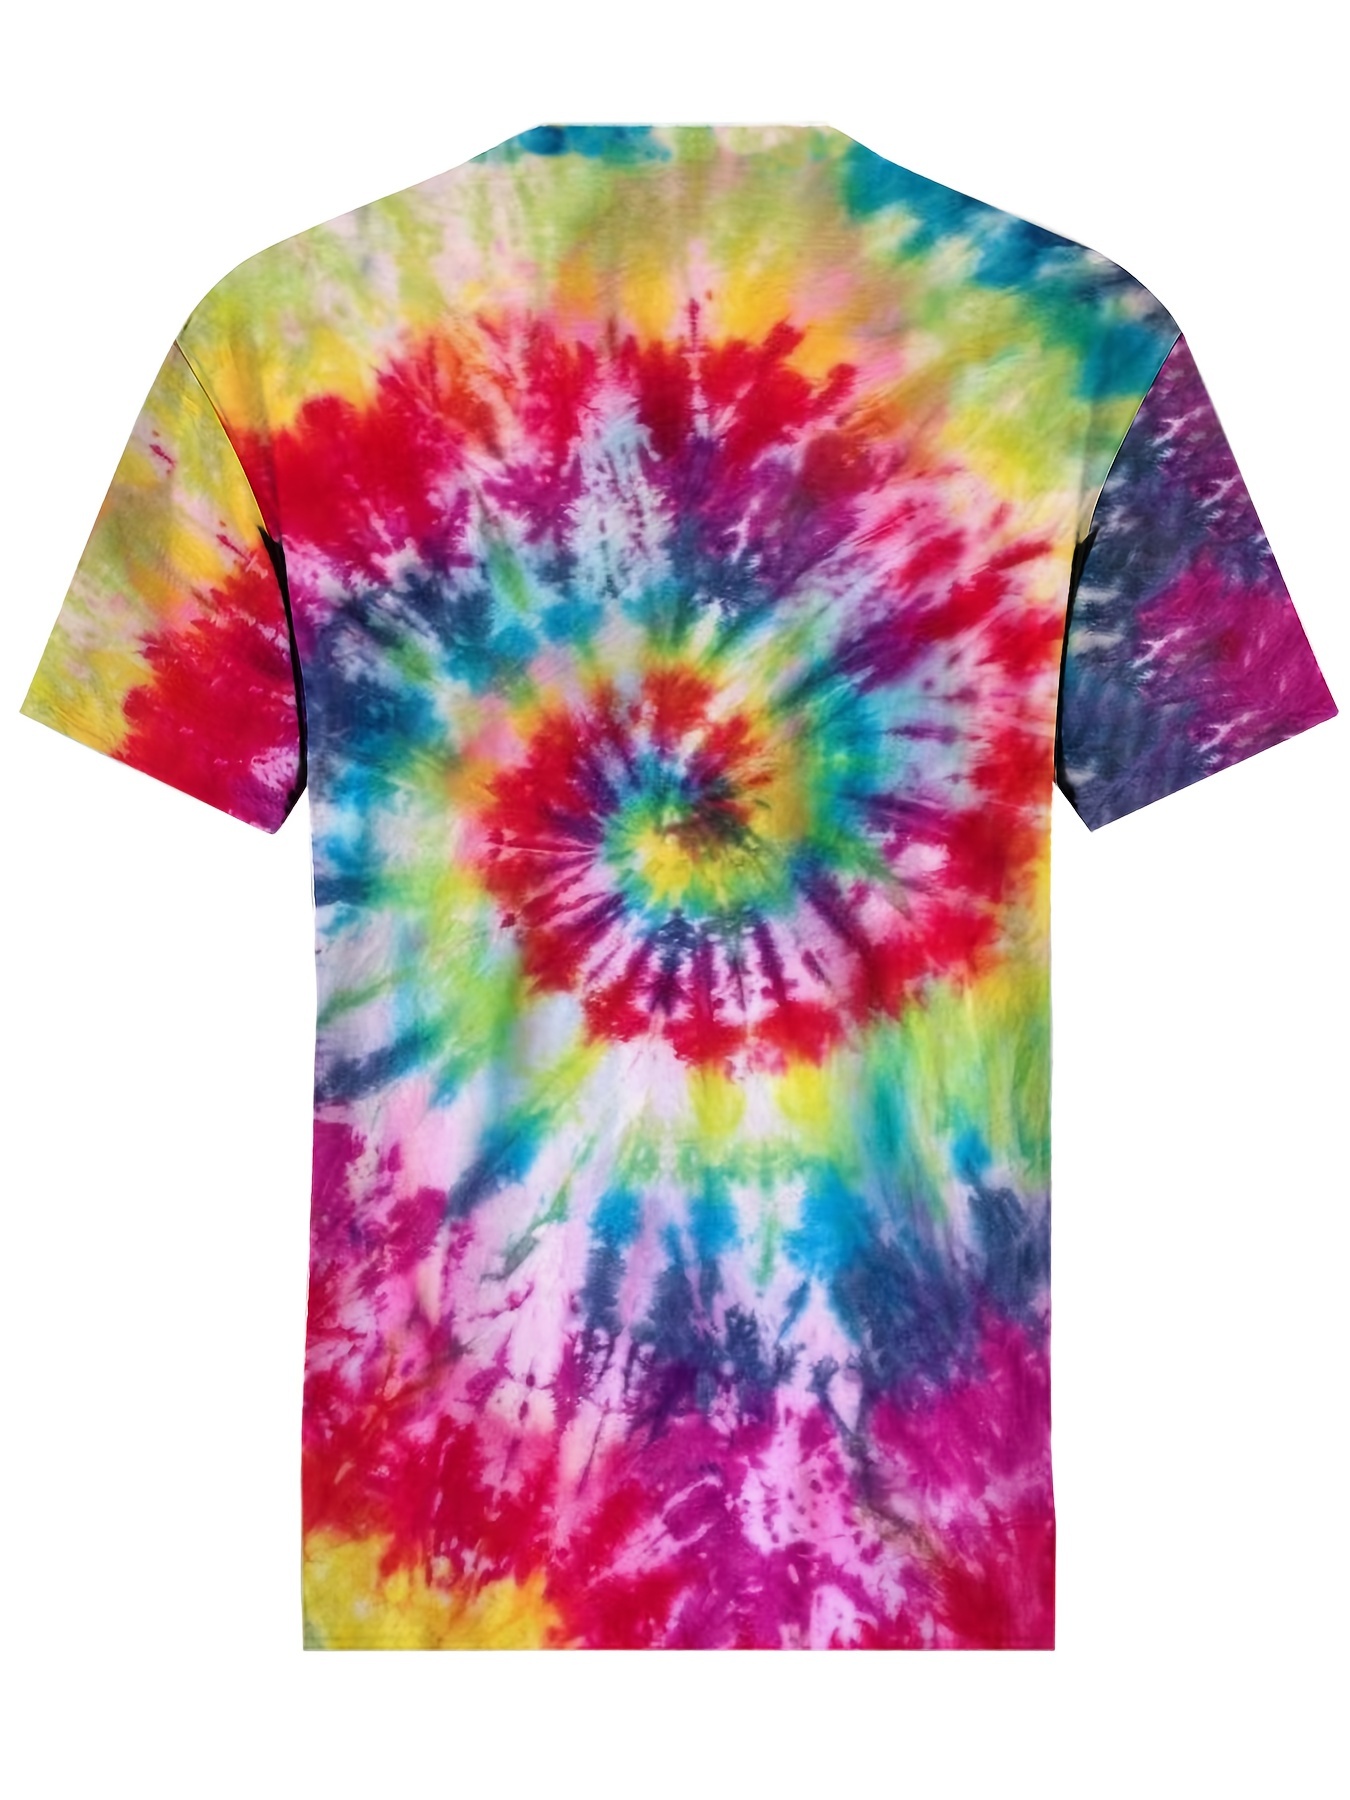 Camiseta Tie-Dye Fuelling The WorldCompre na loja online da Fuss